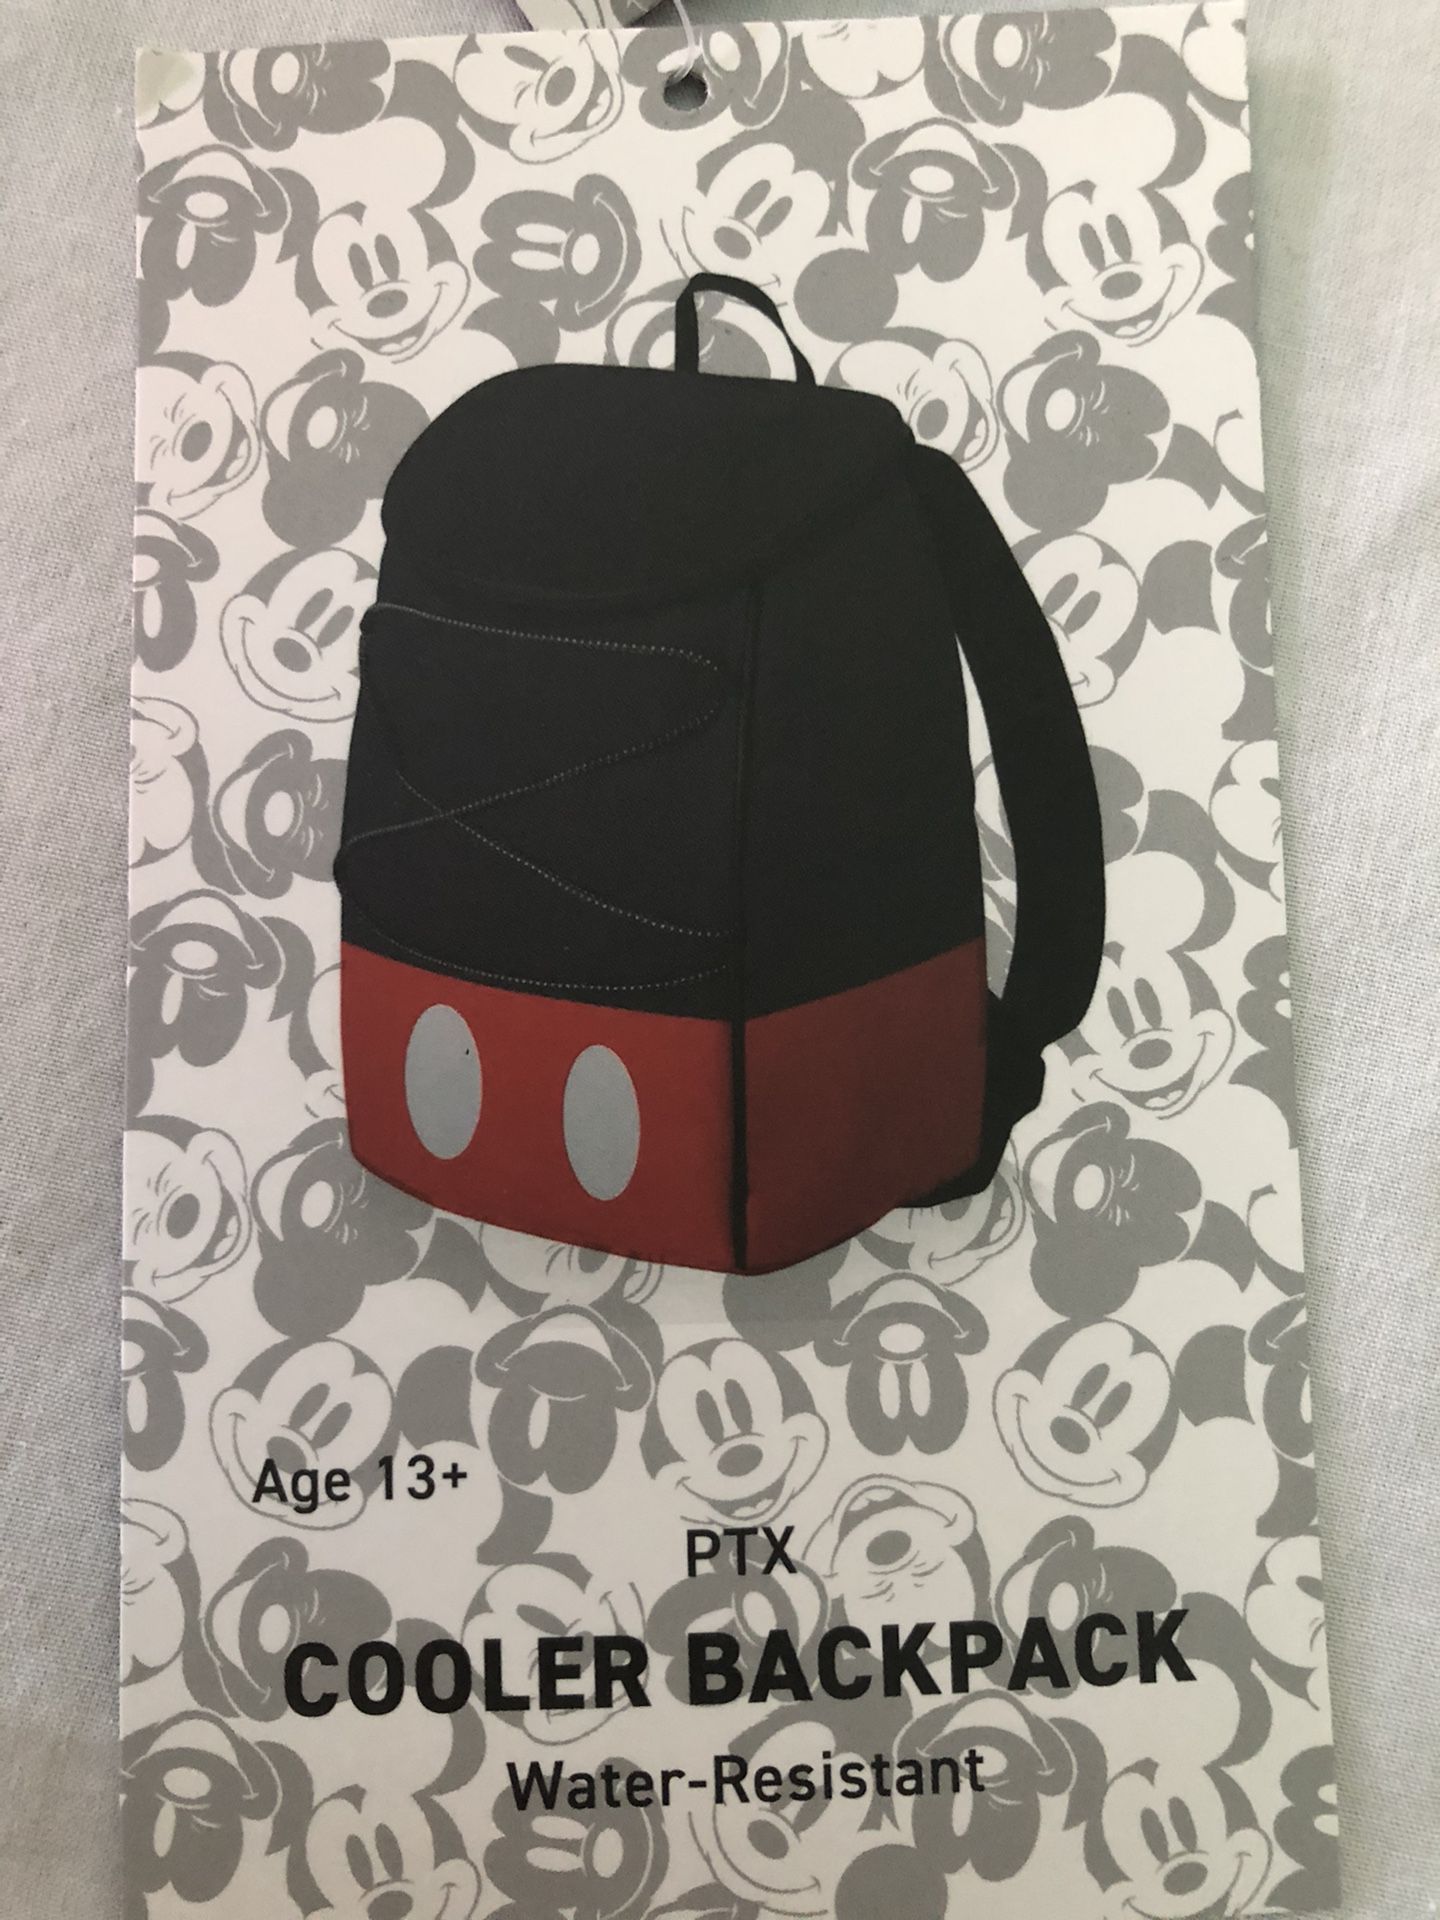 Mickey / Disney Cooler Backpack